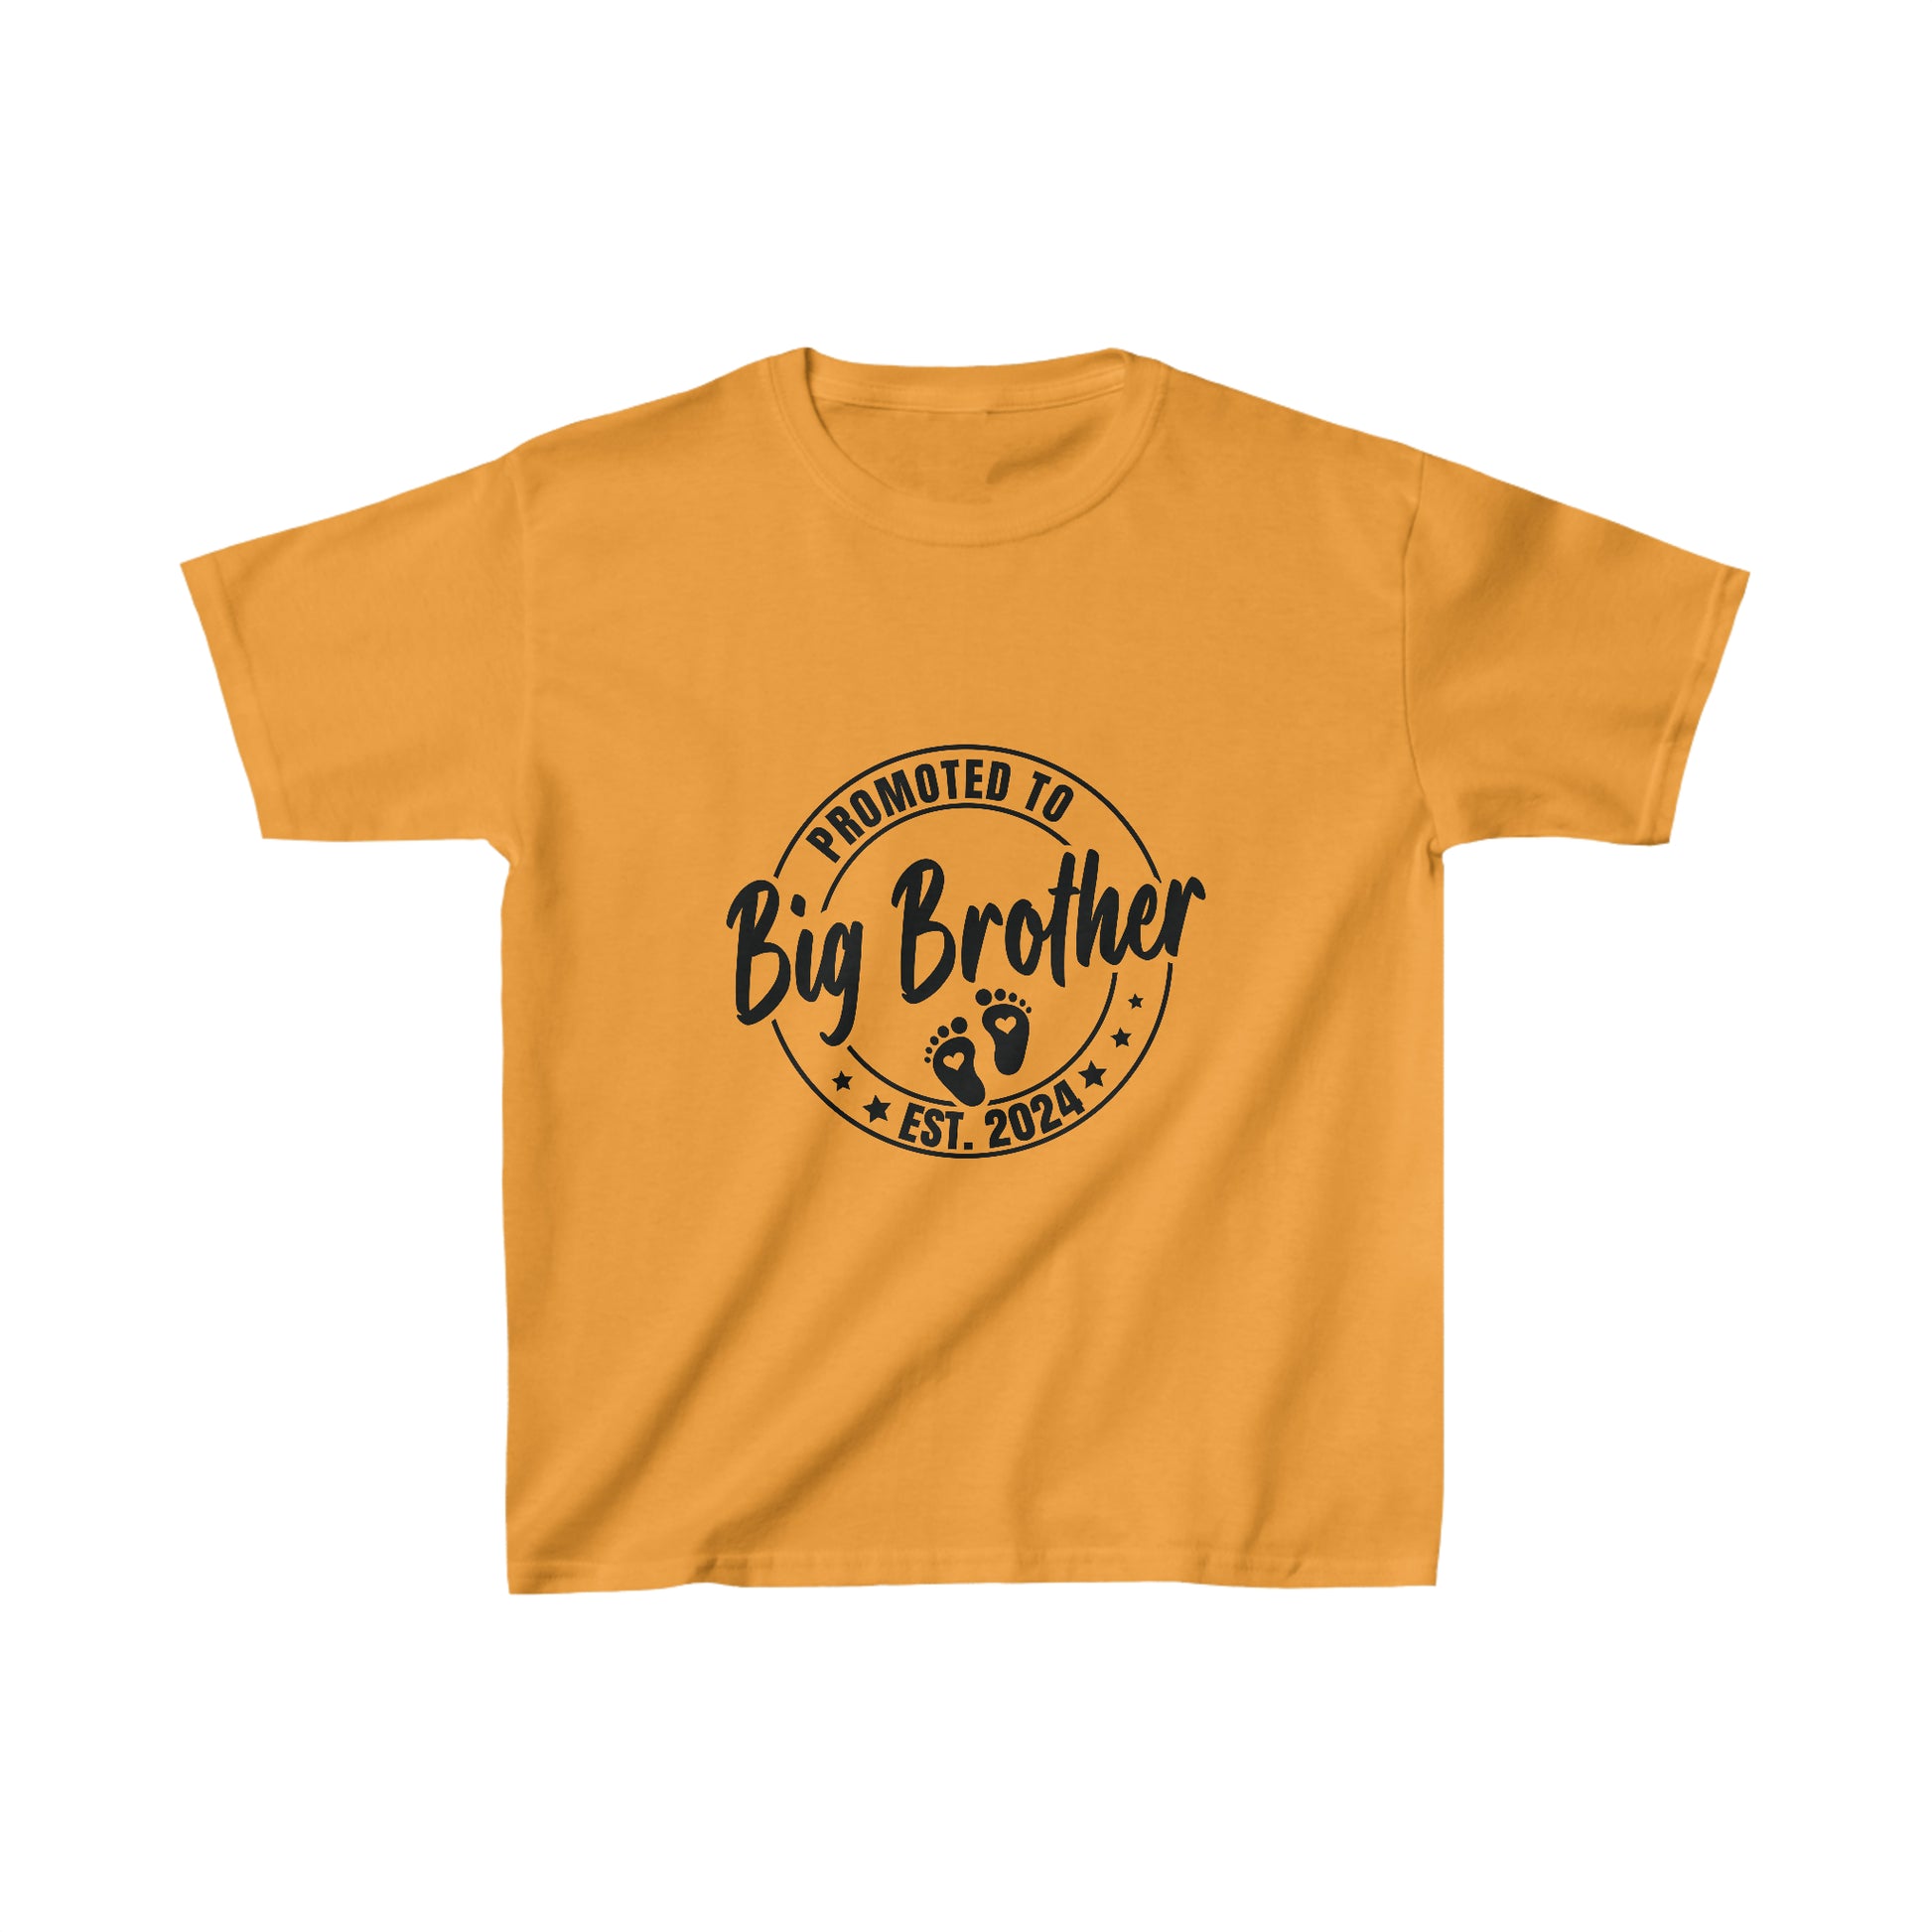 big brother tee shirts